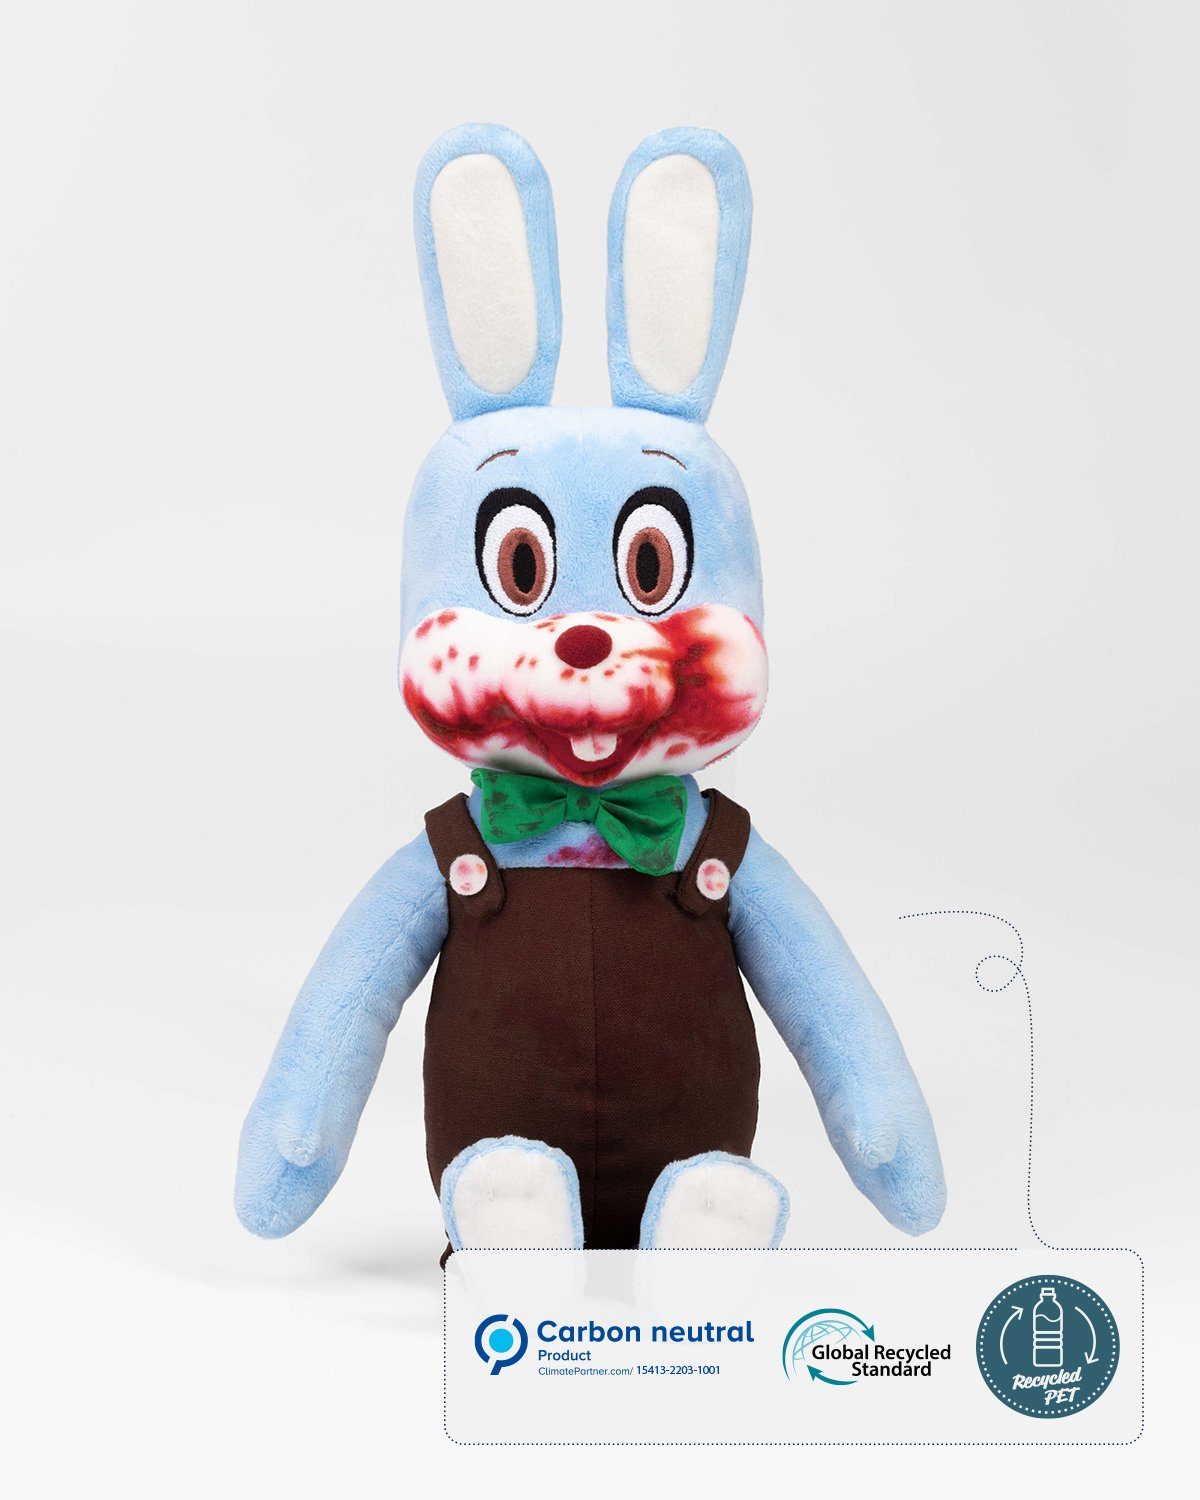 iTEMLAB Plüschfigur Silent Hill "Robbie the Rabbit" Blue Version, enthält recyceltes Material (Global Recycled Standard)